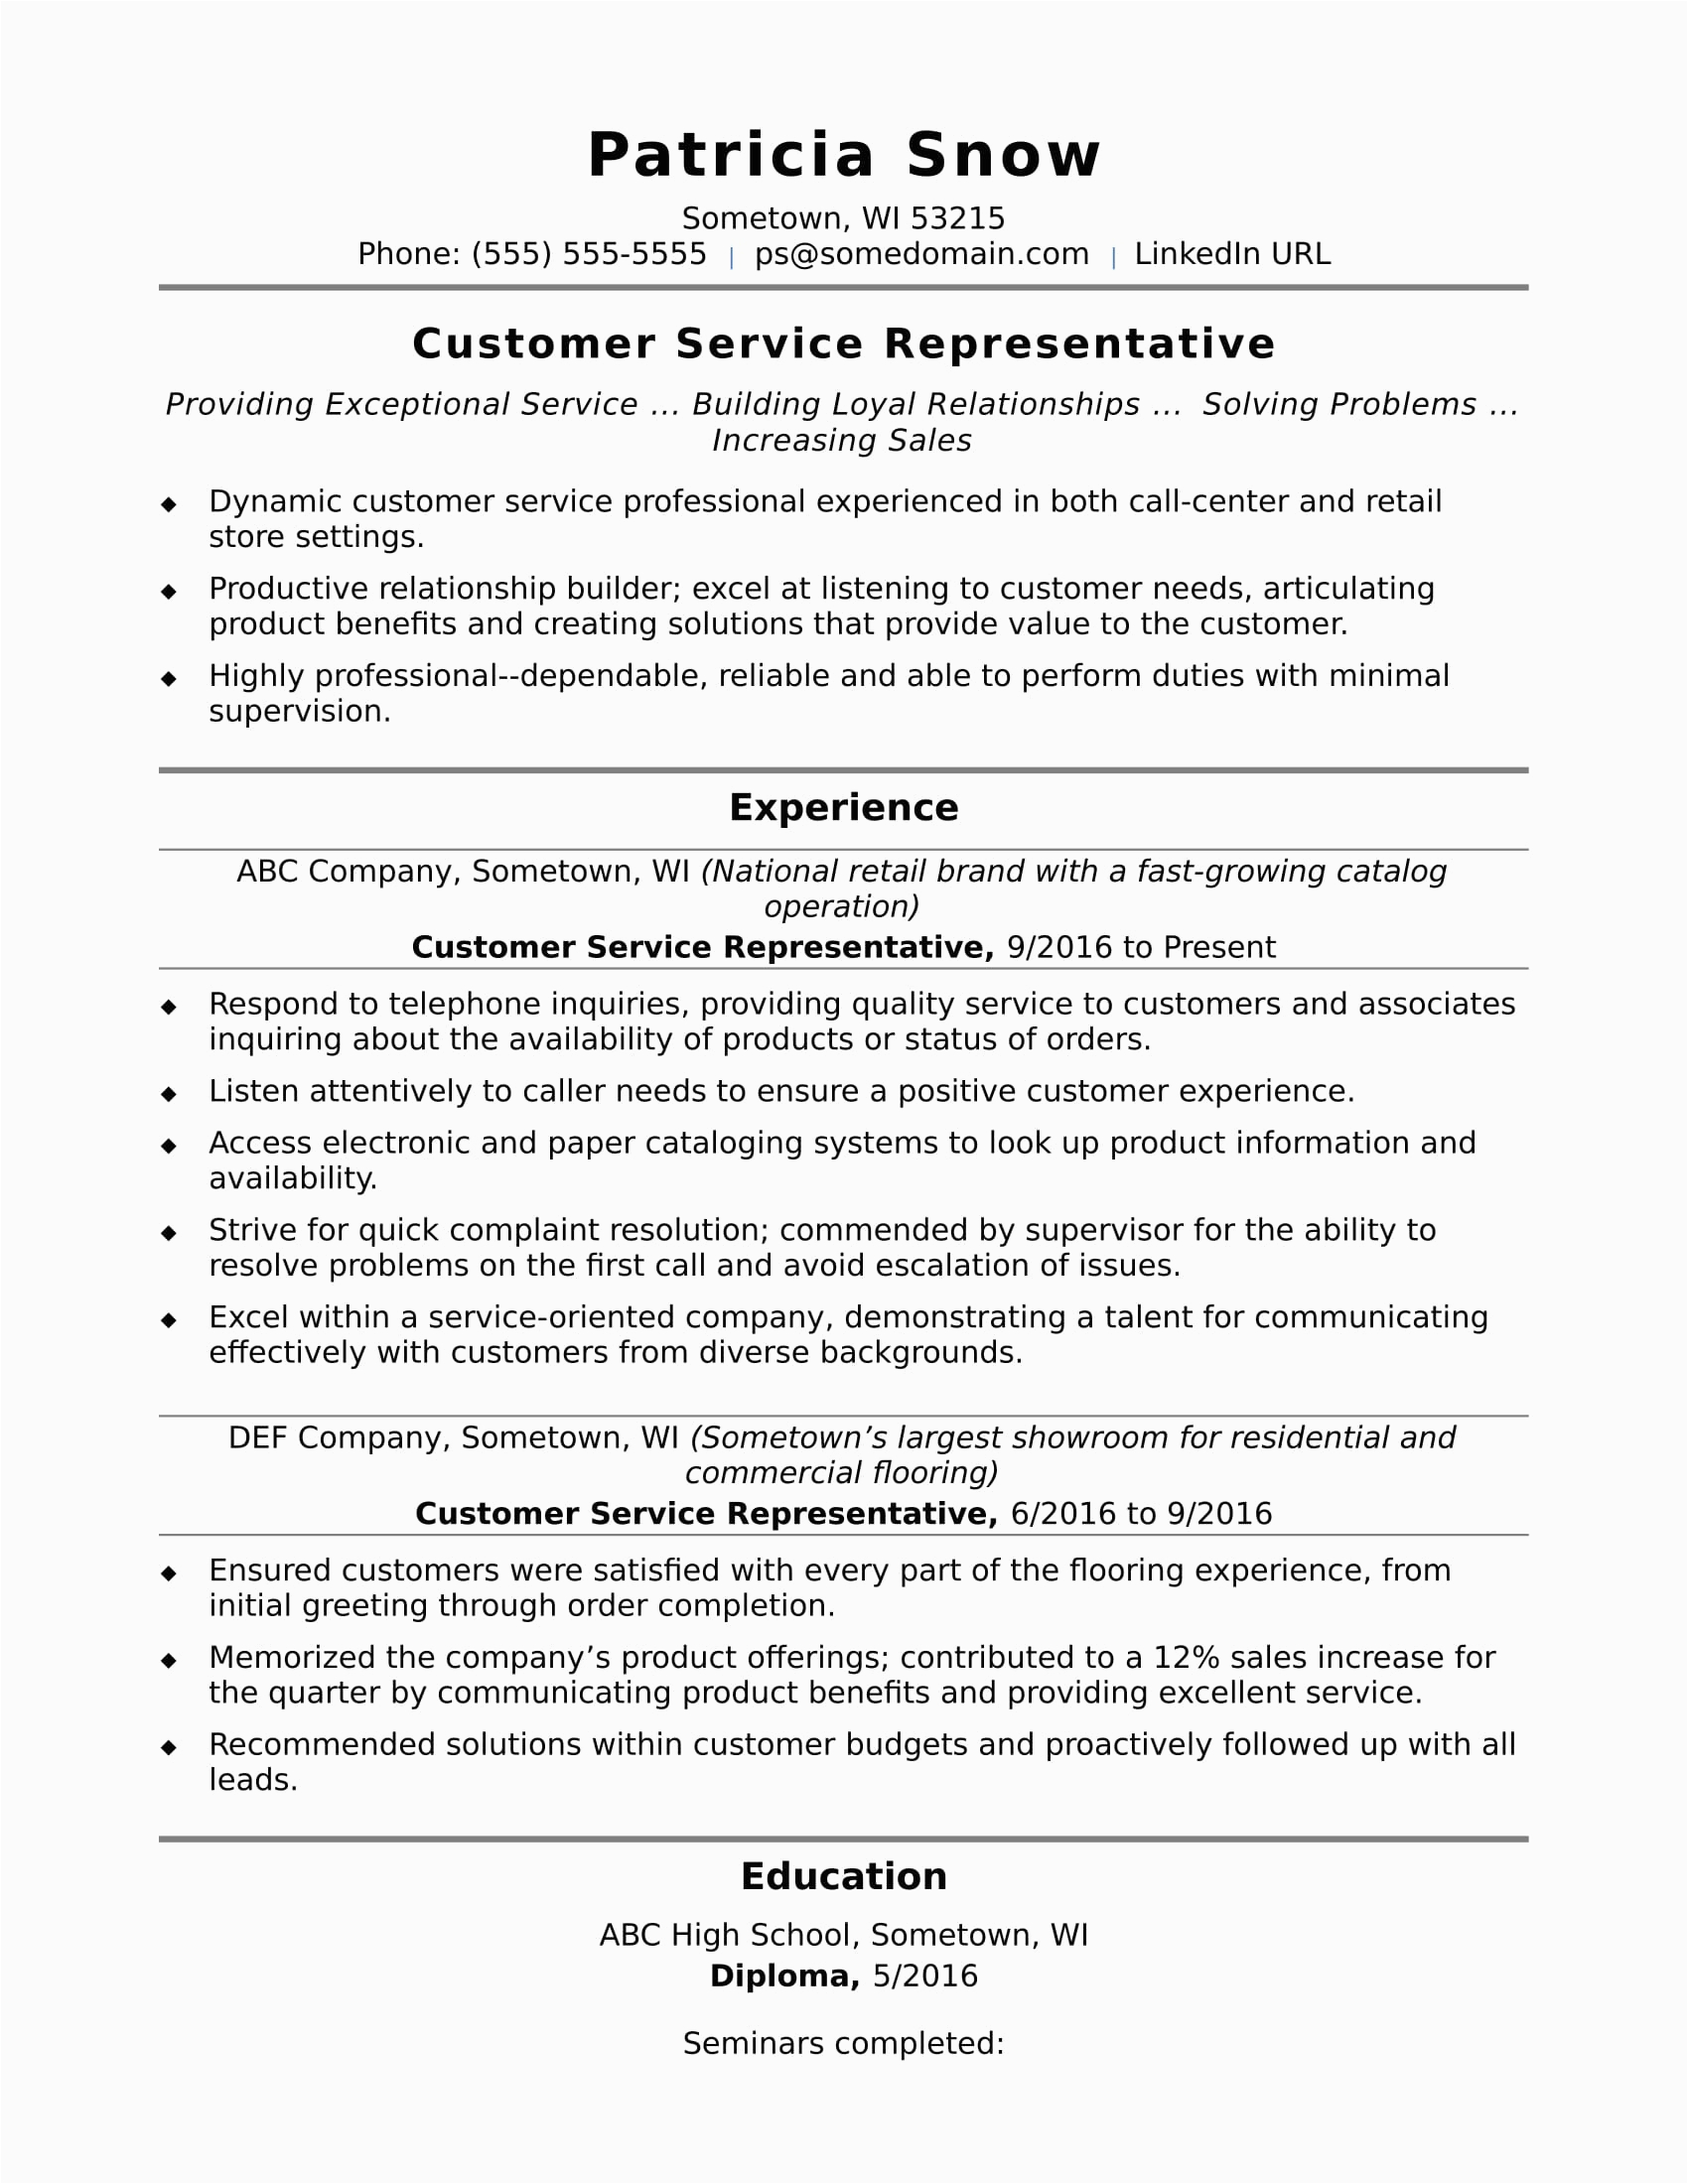 Sample Resume for Customer Care Representative Customer Service Representative Resume Sample